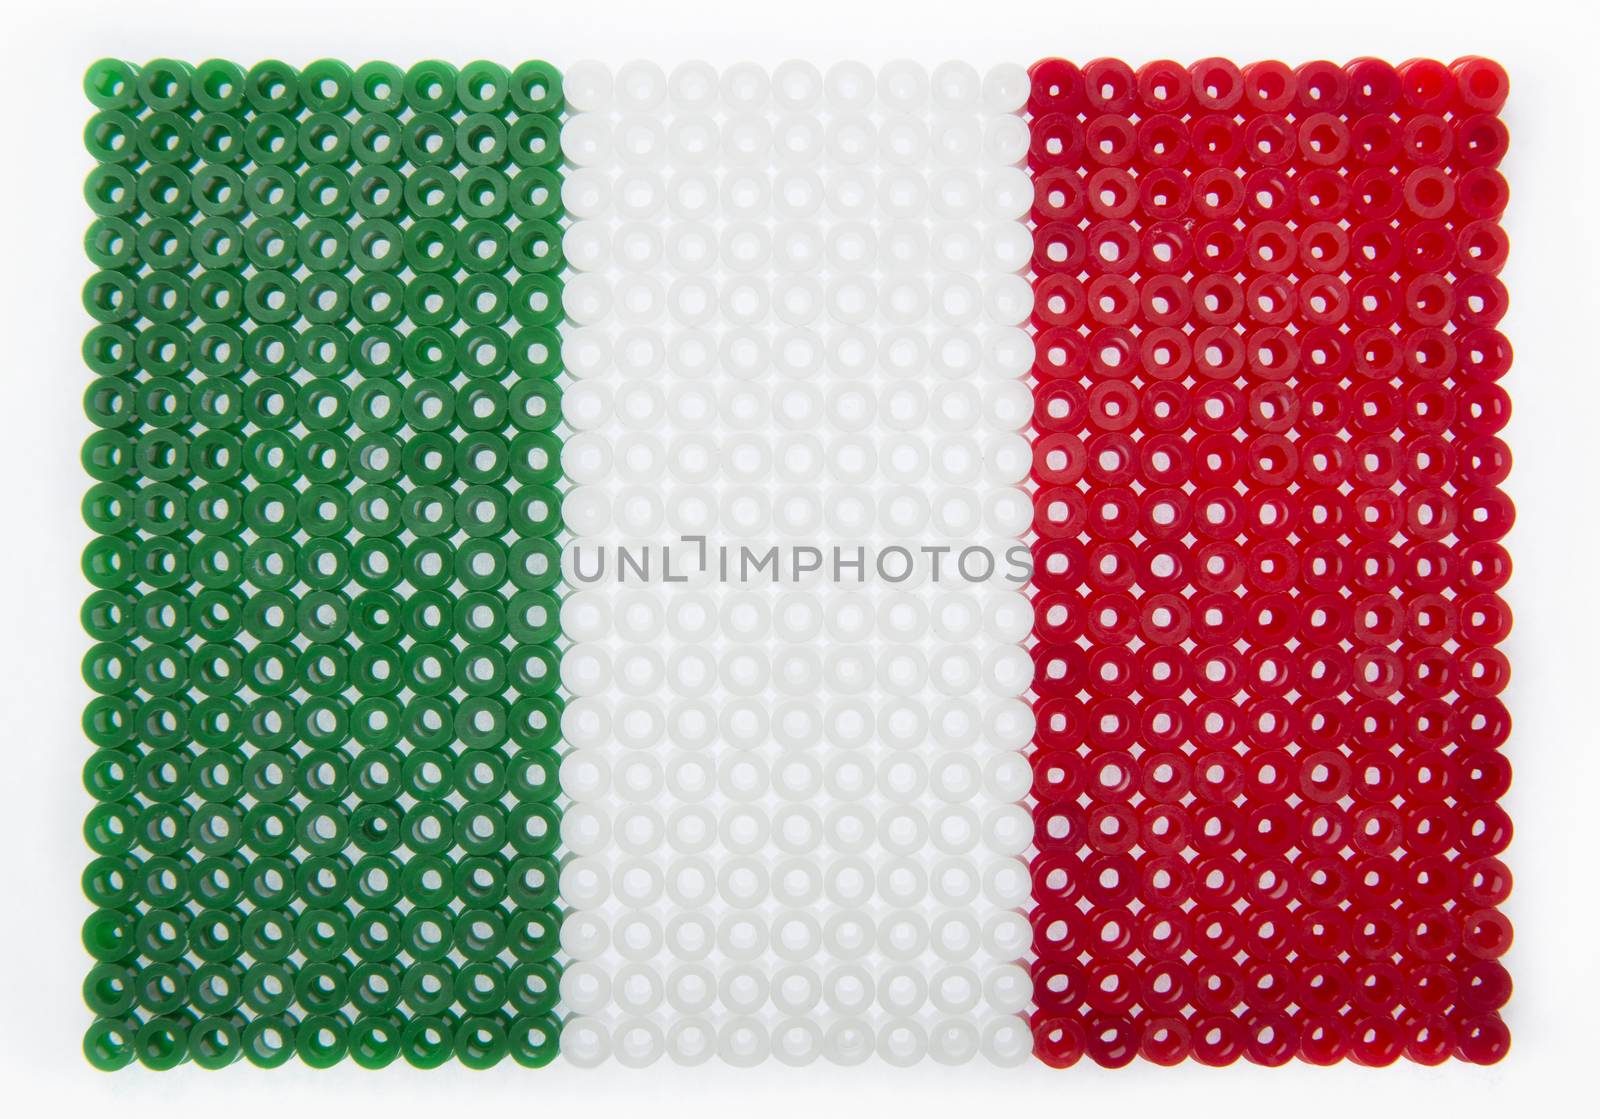 Italian Flag by gemenacom